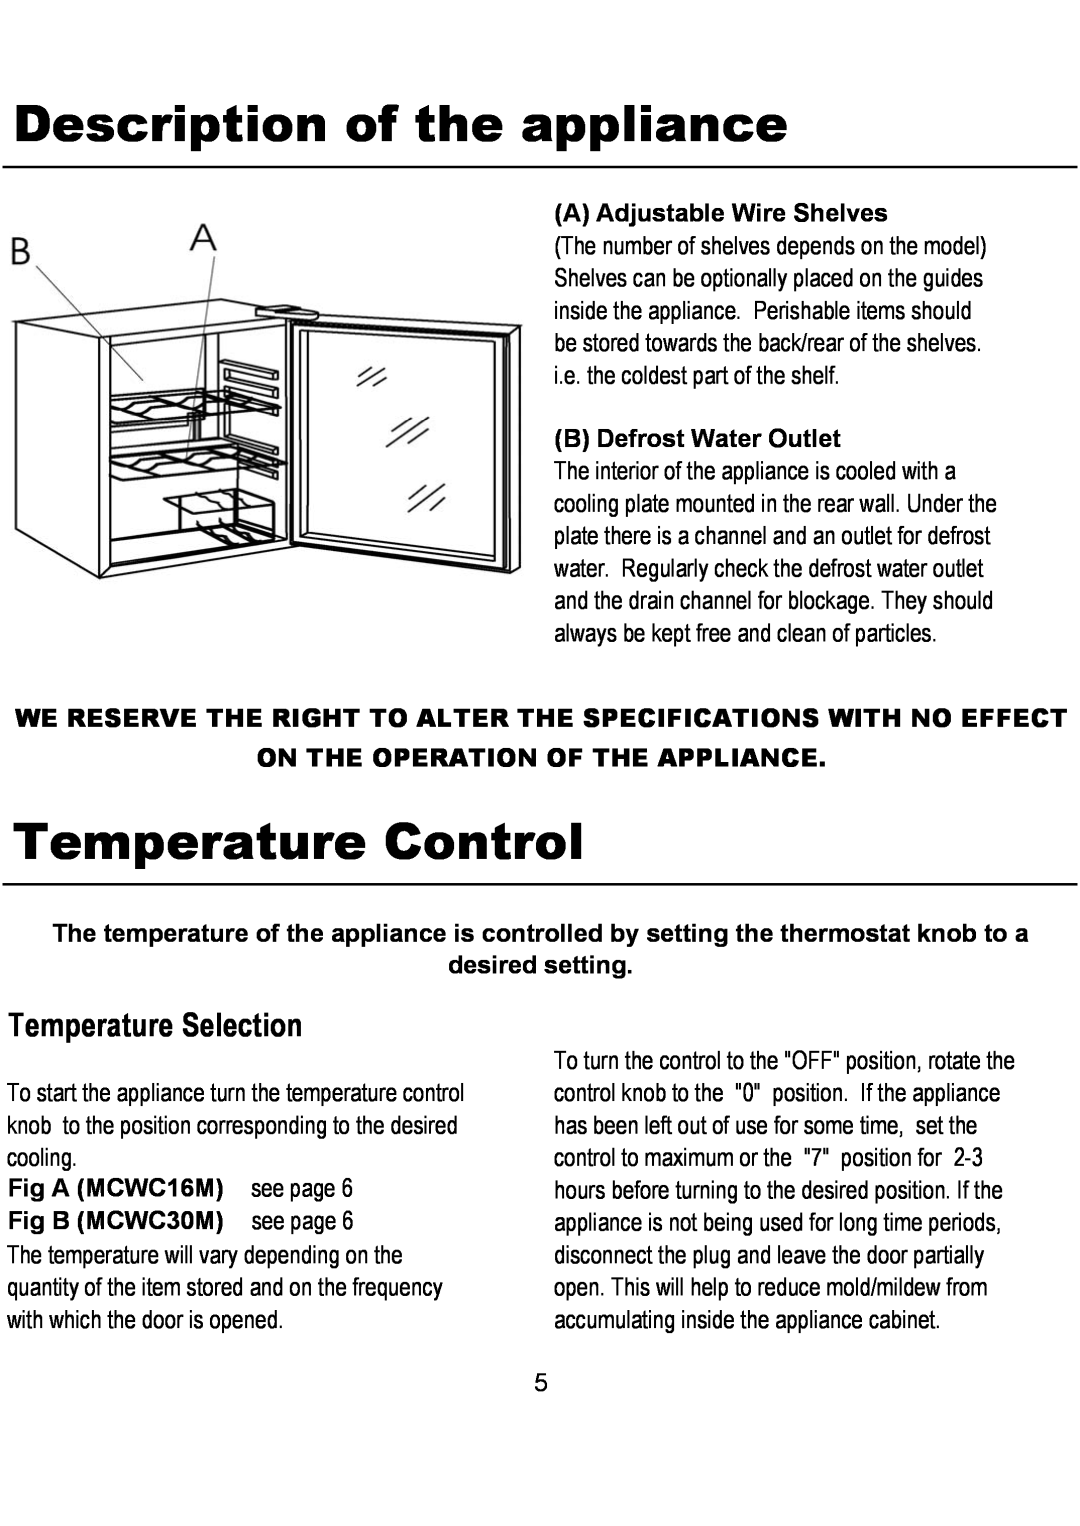 Magic Chef MCWC16M Description of the appliance, Temperature Control, Temperature Selection, A Adjustable Wire Shelves 